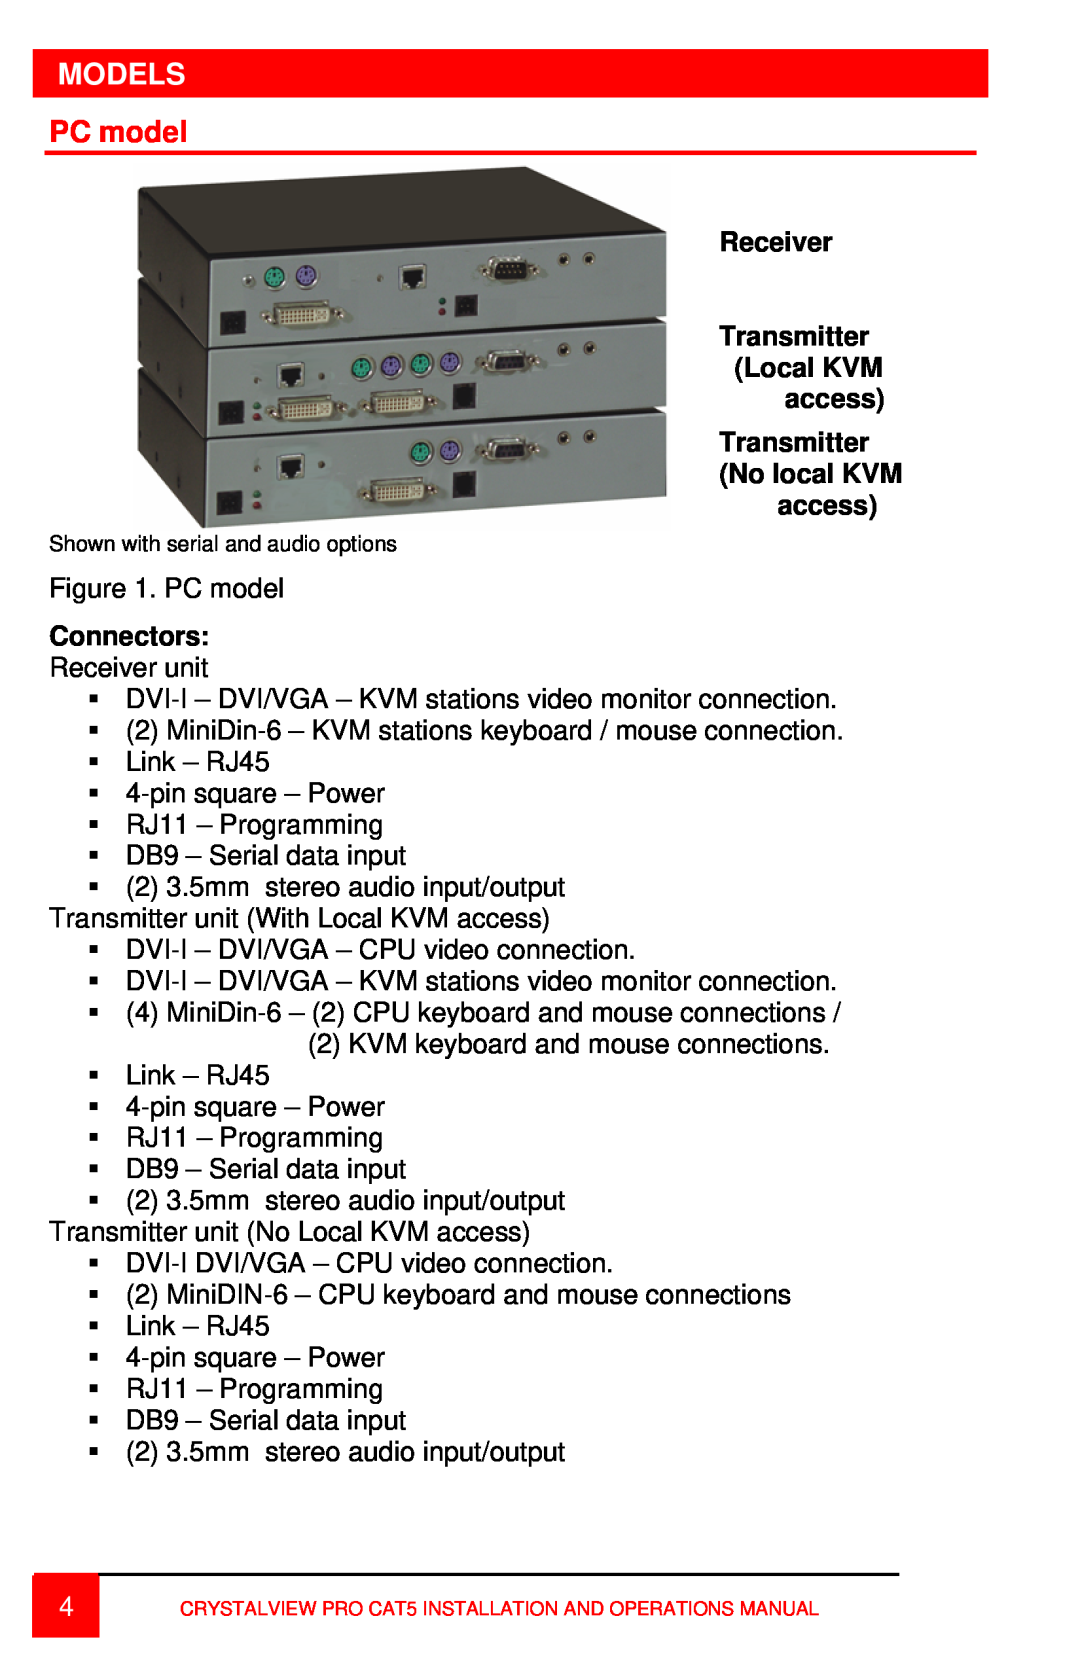 Rose electronic CAT5 Models, PC model, Receiver Transmitter Local KVM access Transmitter No local KVM access, Connectors 